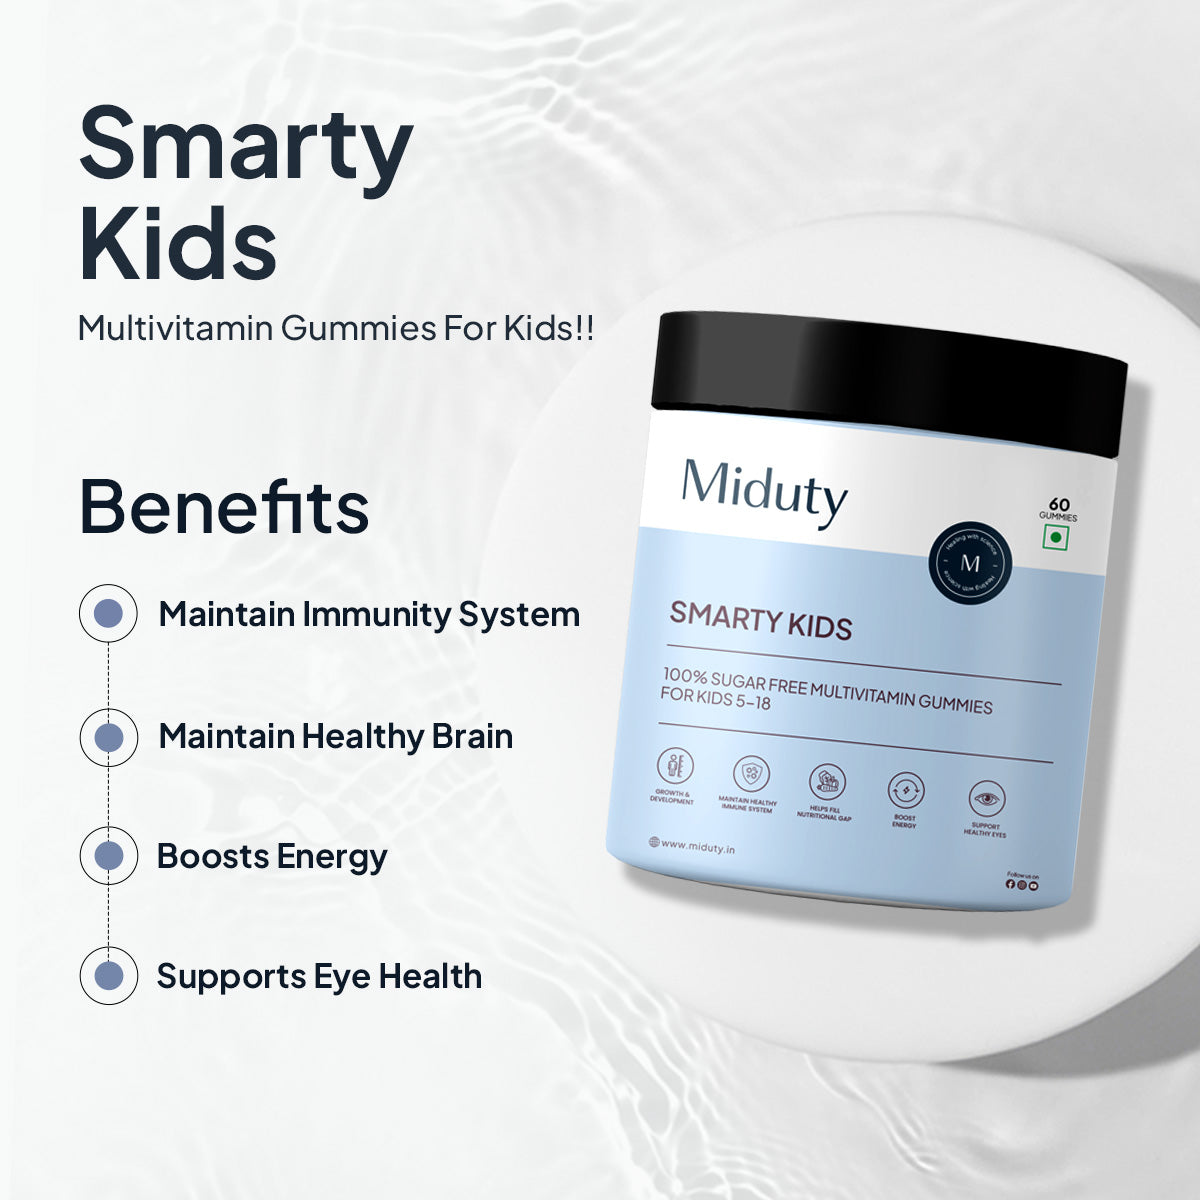 Smarty Kids - Miduty